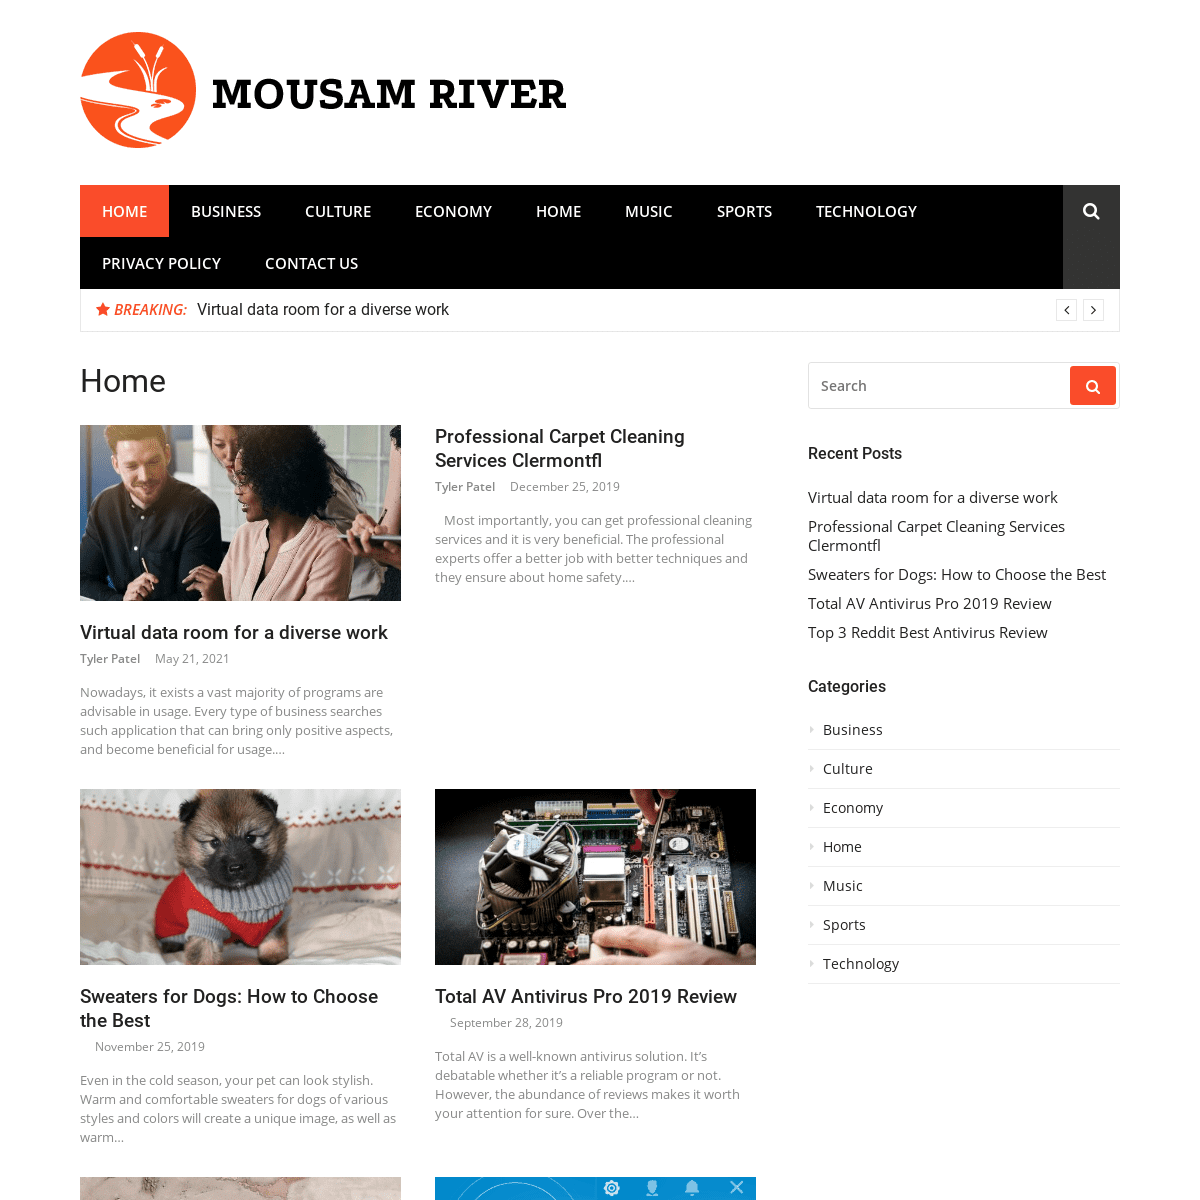 A complete backup of https://mousam-river.com